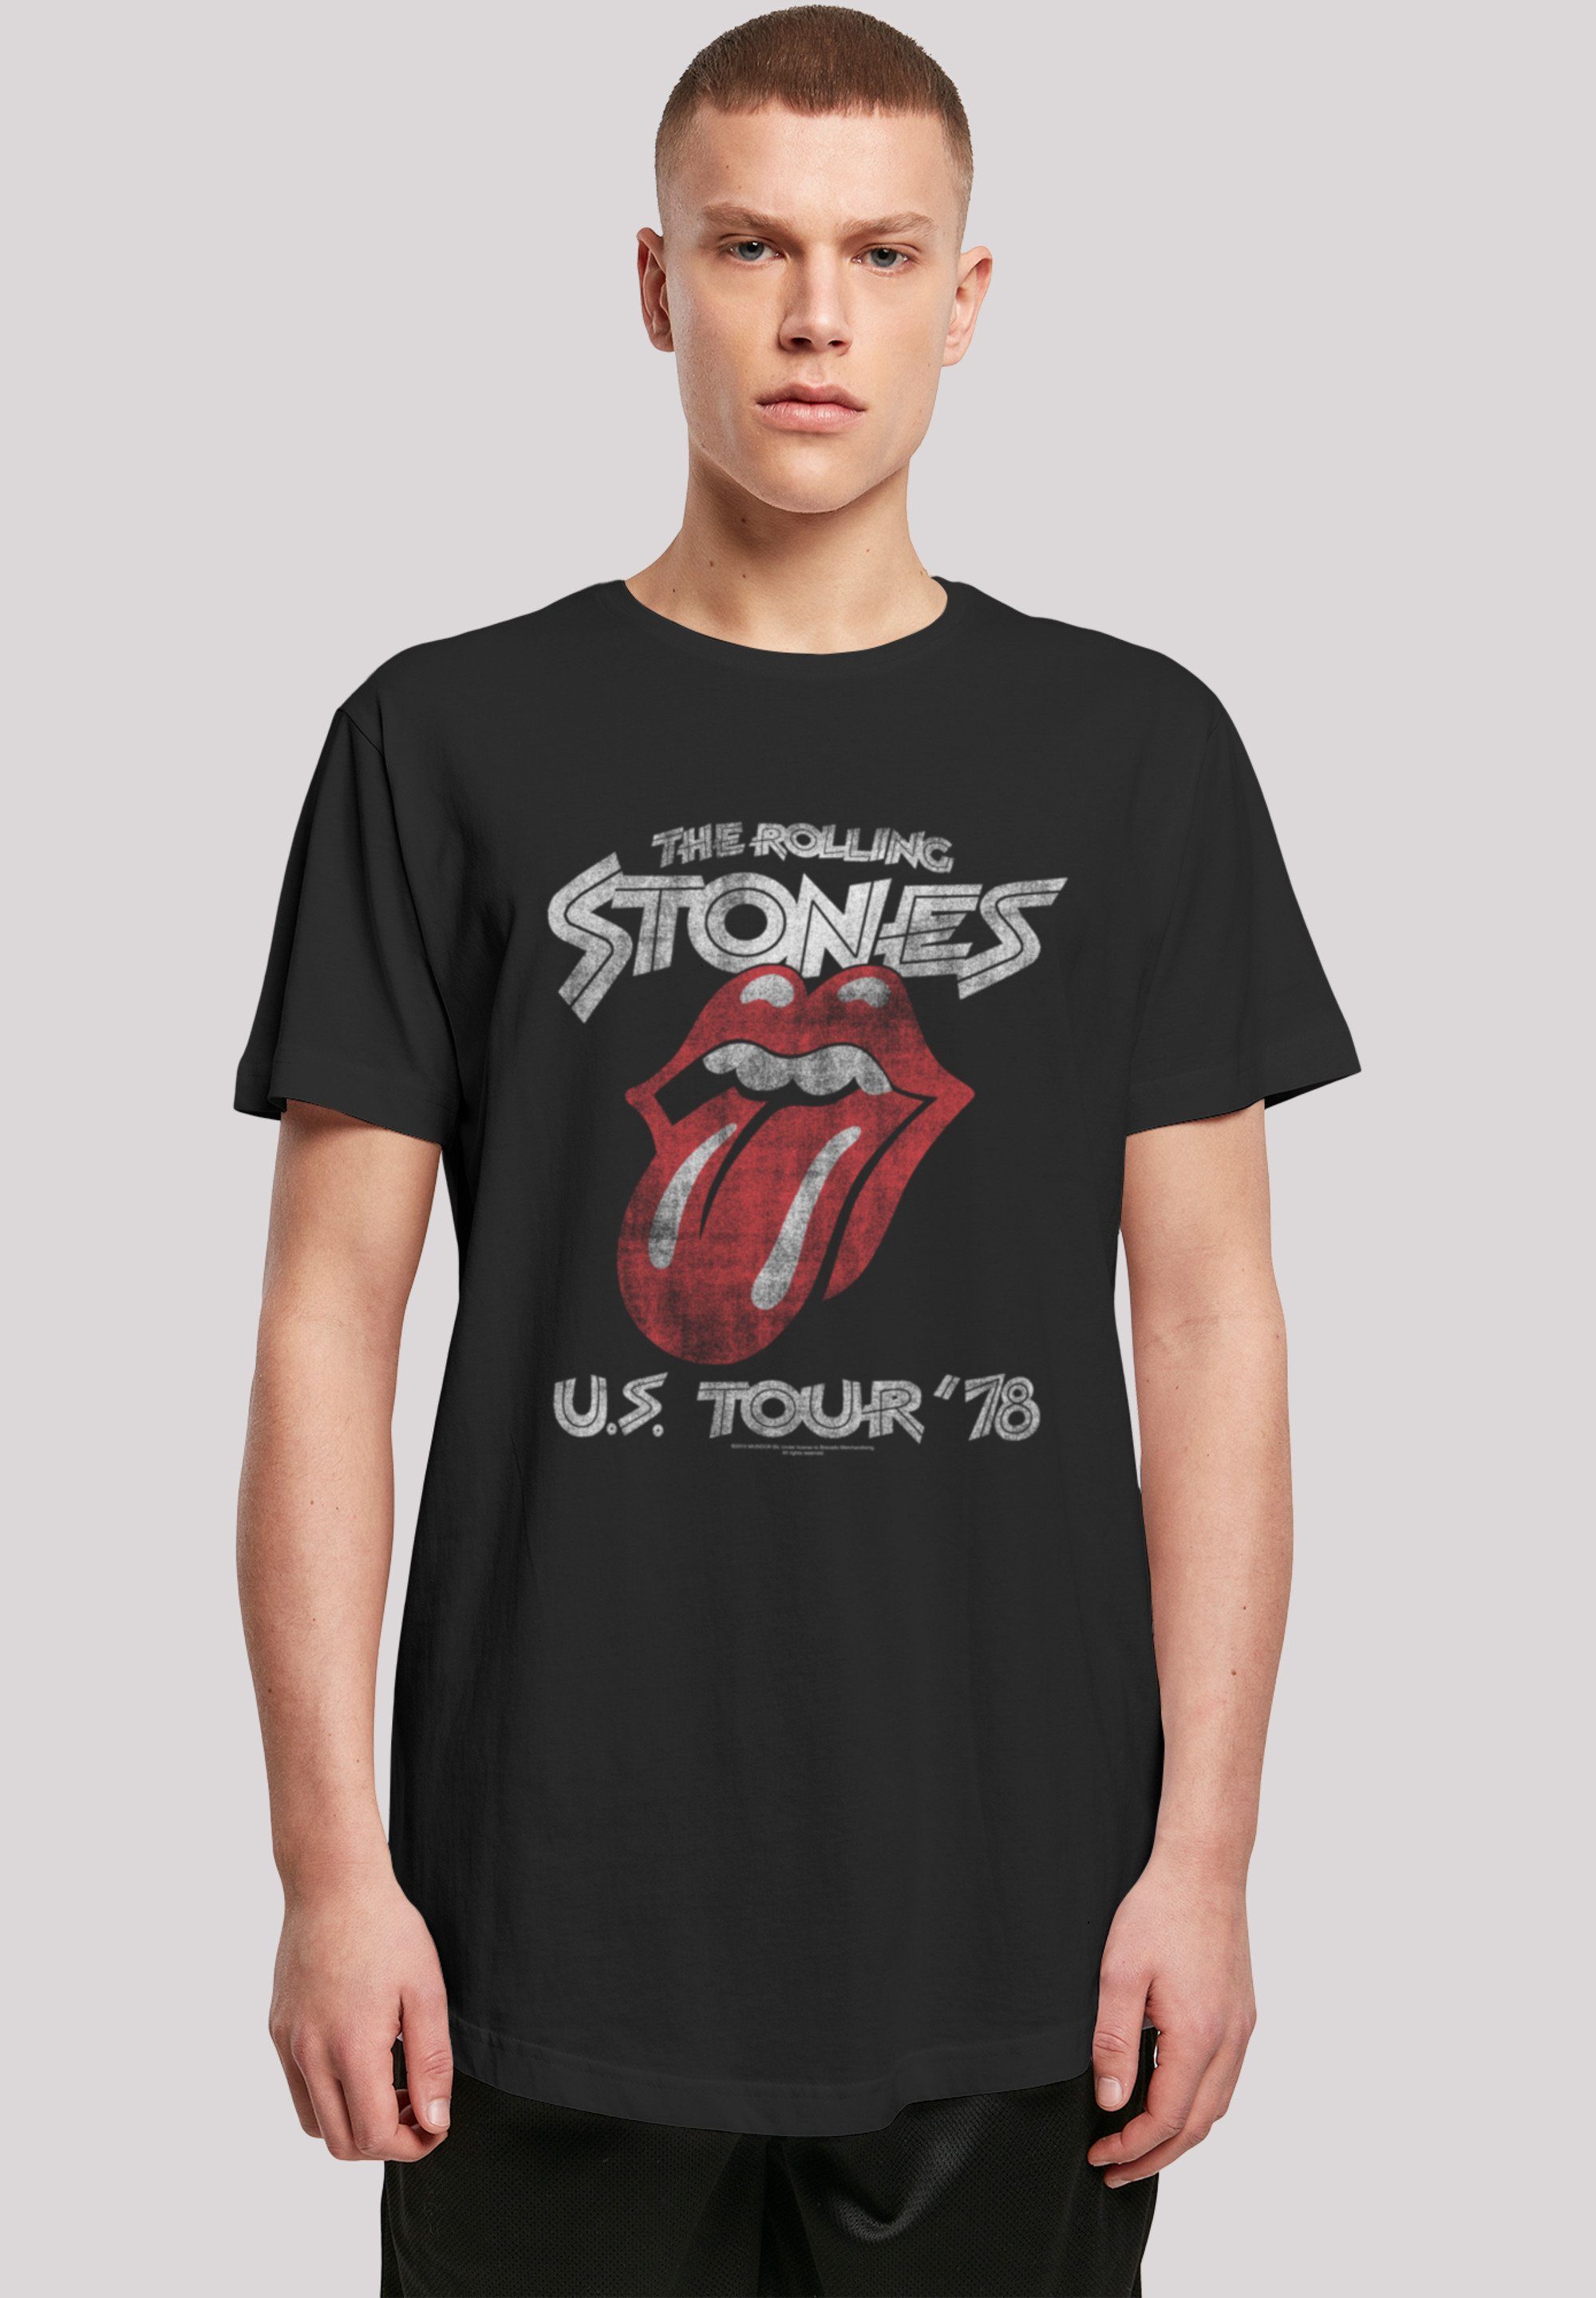 und Front T-Shirt ist Tour M 180 cm Model groß The US Das F4NT4STIC Rock Print, Größe trägt \'78 Rolling Stones Band